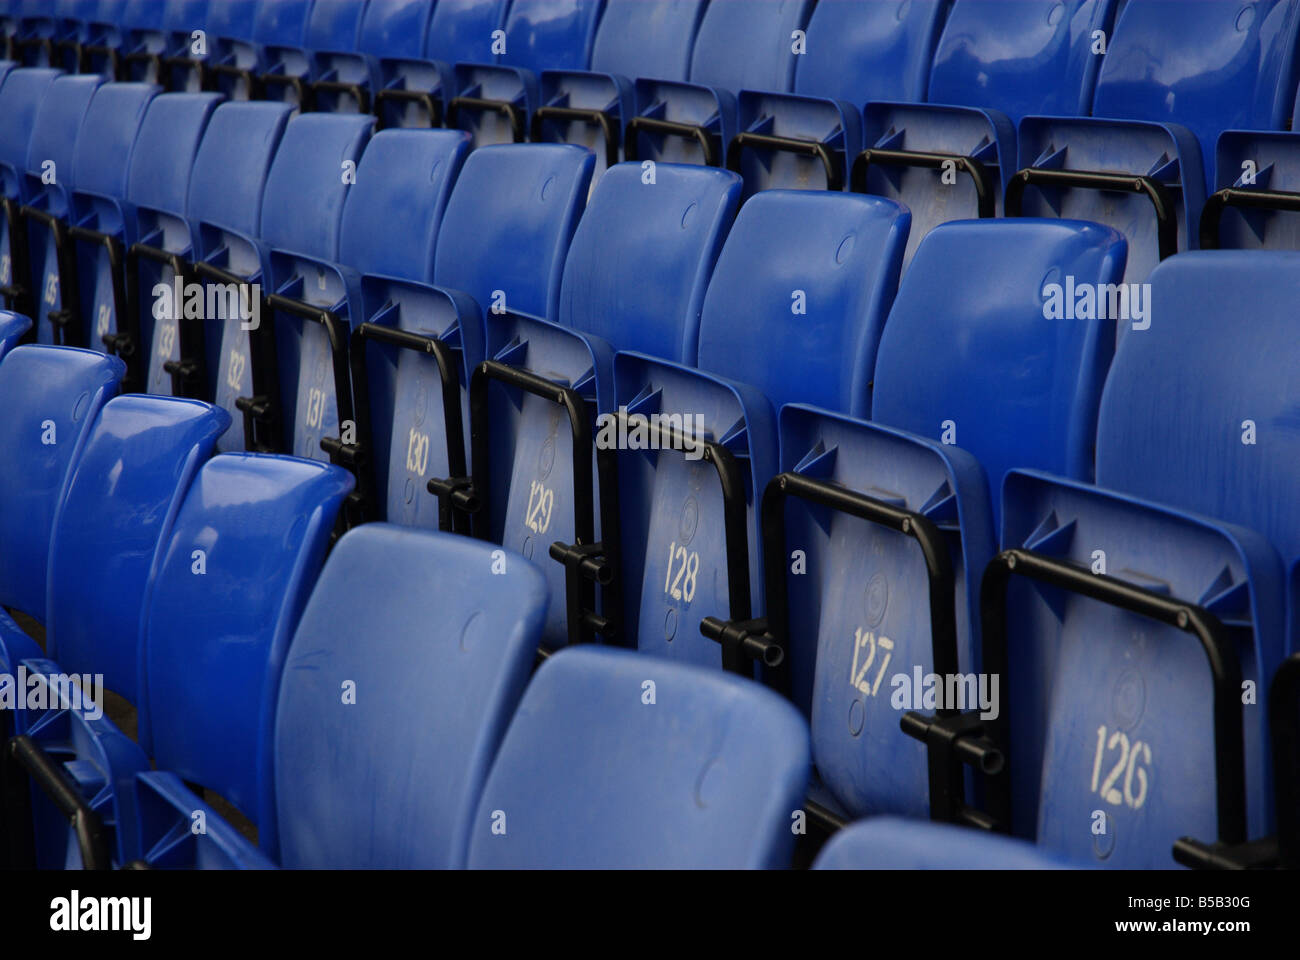 Goodison Park home of English Premier League team Everton Football Club Stock Photo